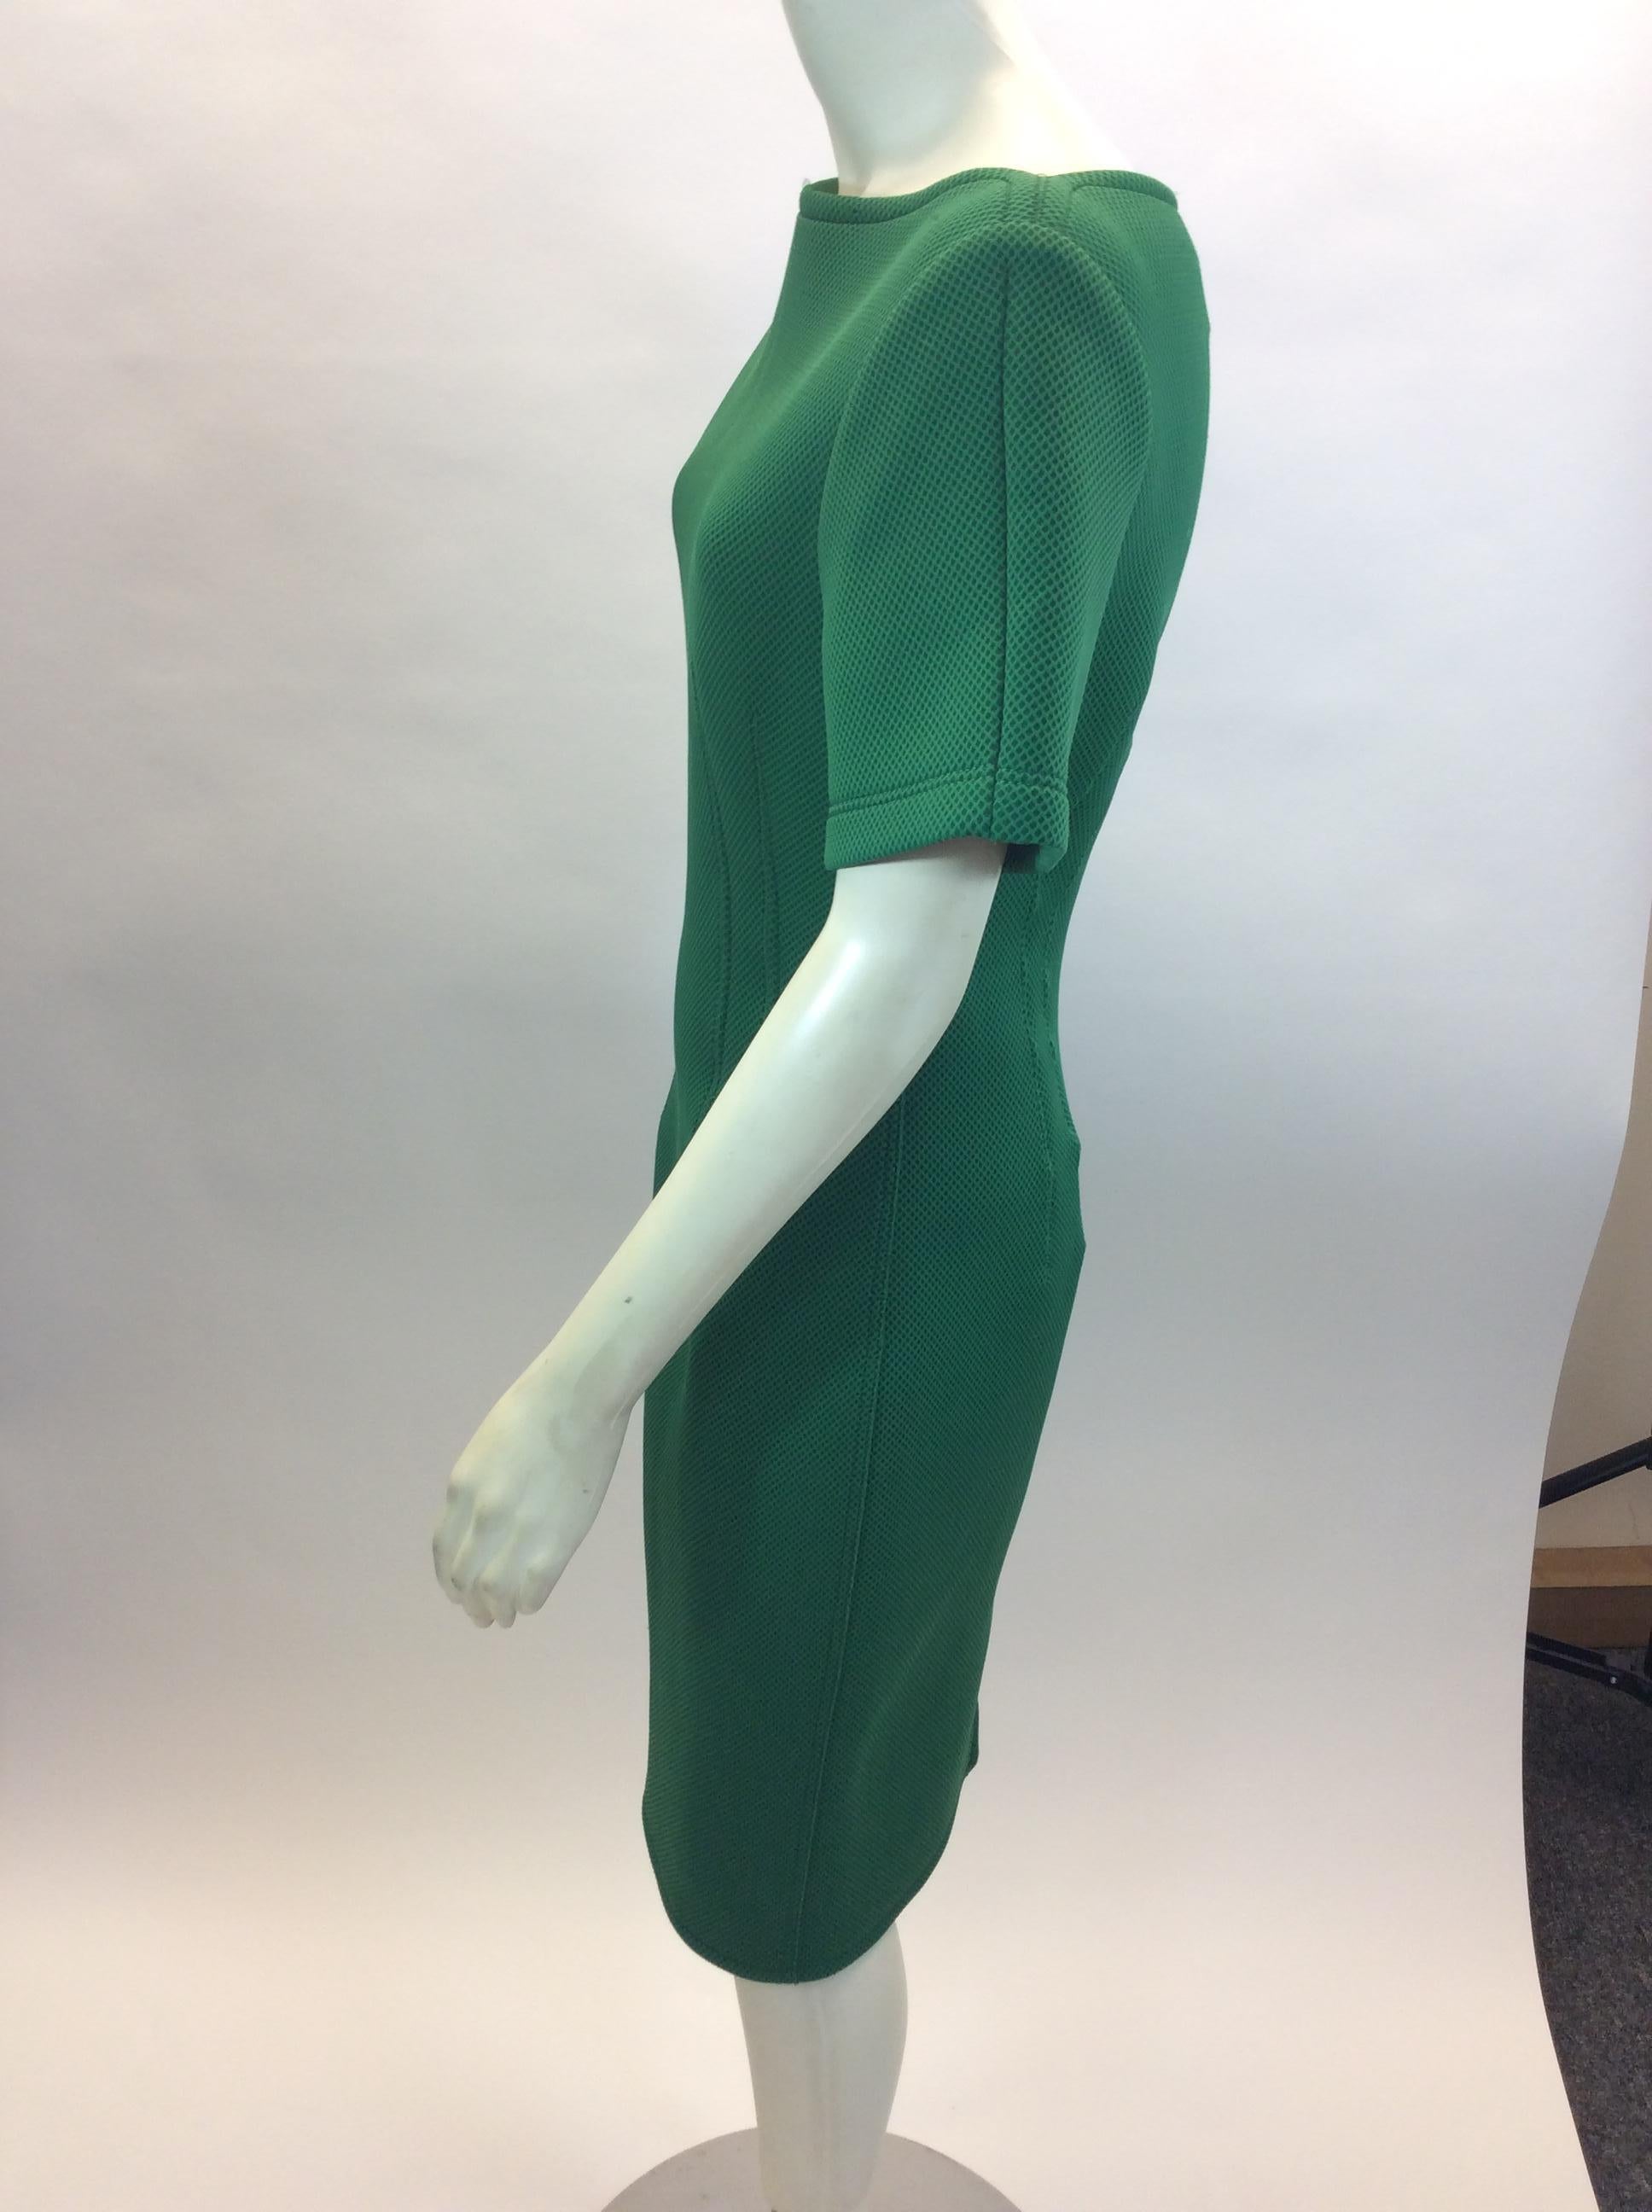 Lanvin Bright Green Short Sleeve Dress
$650
Made in Italy
91% Polyamide, 9% Elastane
Size 38
Length 37.5